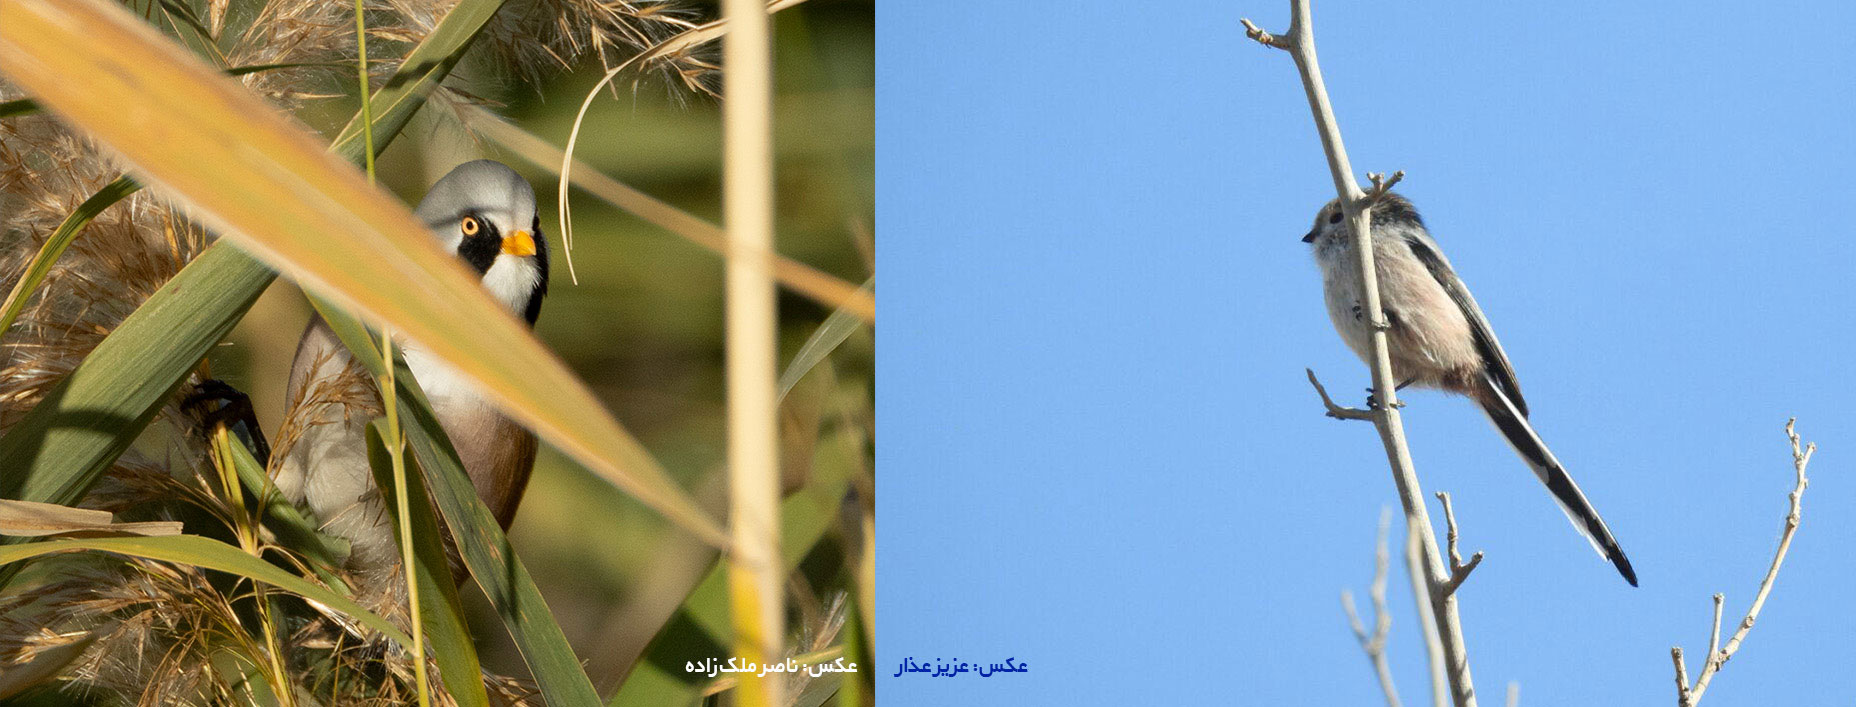 Bearded reedling_long-tailed tit_Aras Julfa birdwatching tour_Iranian Birding Club_Aziz Ozr_Naser Malekzadeh